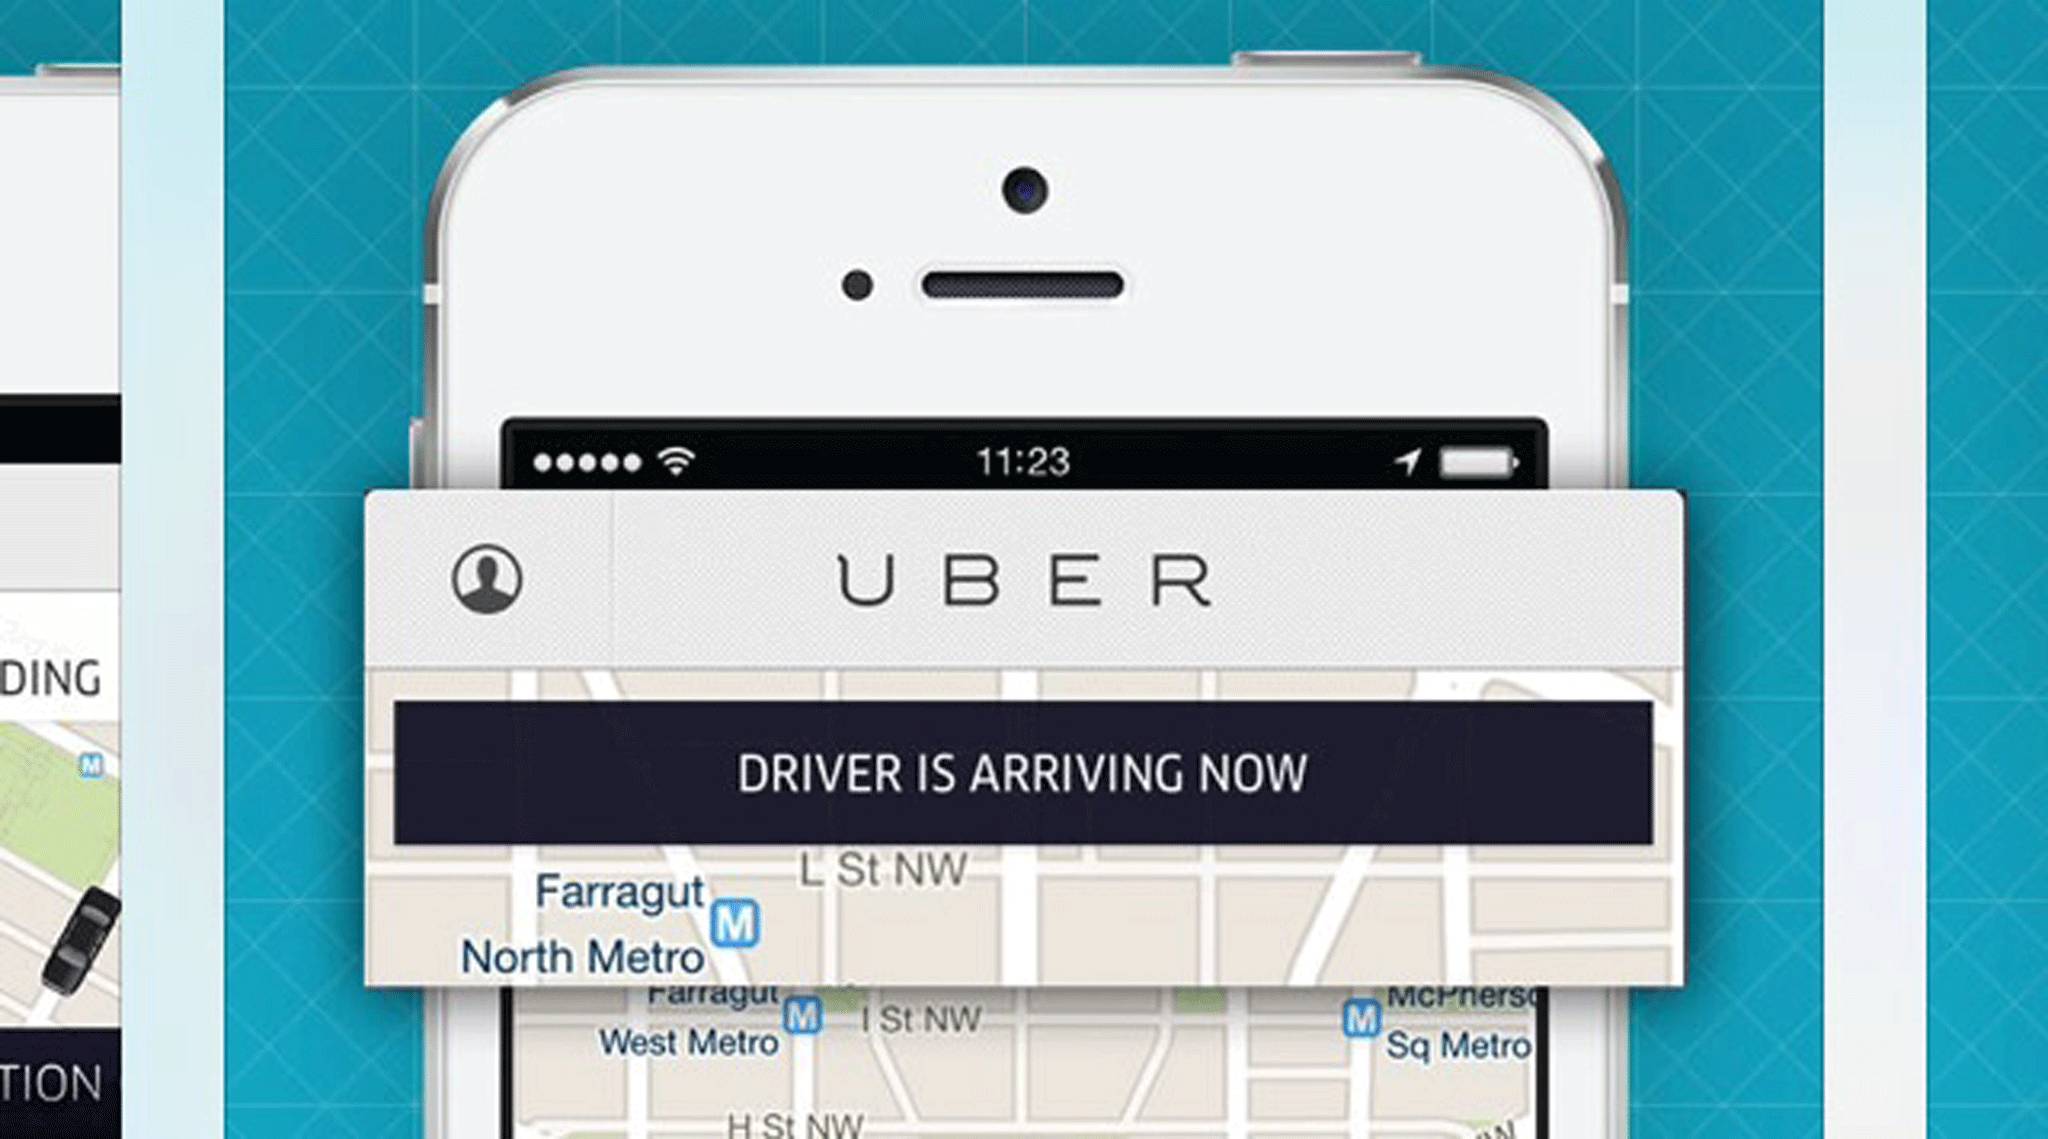 Uber has been launched in over 70 cities worldwide